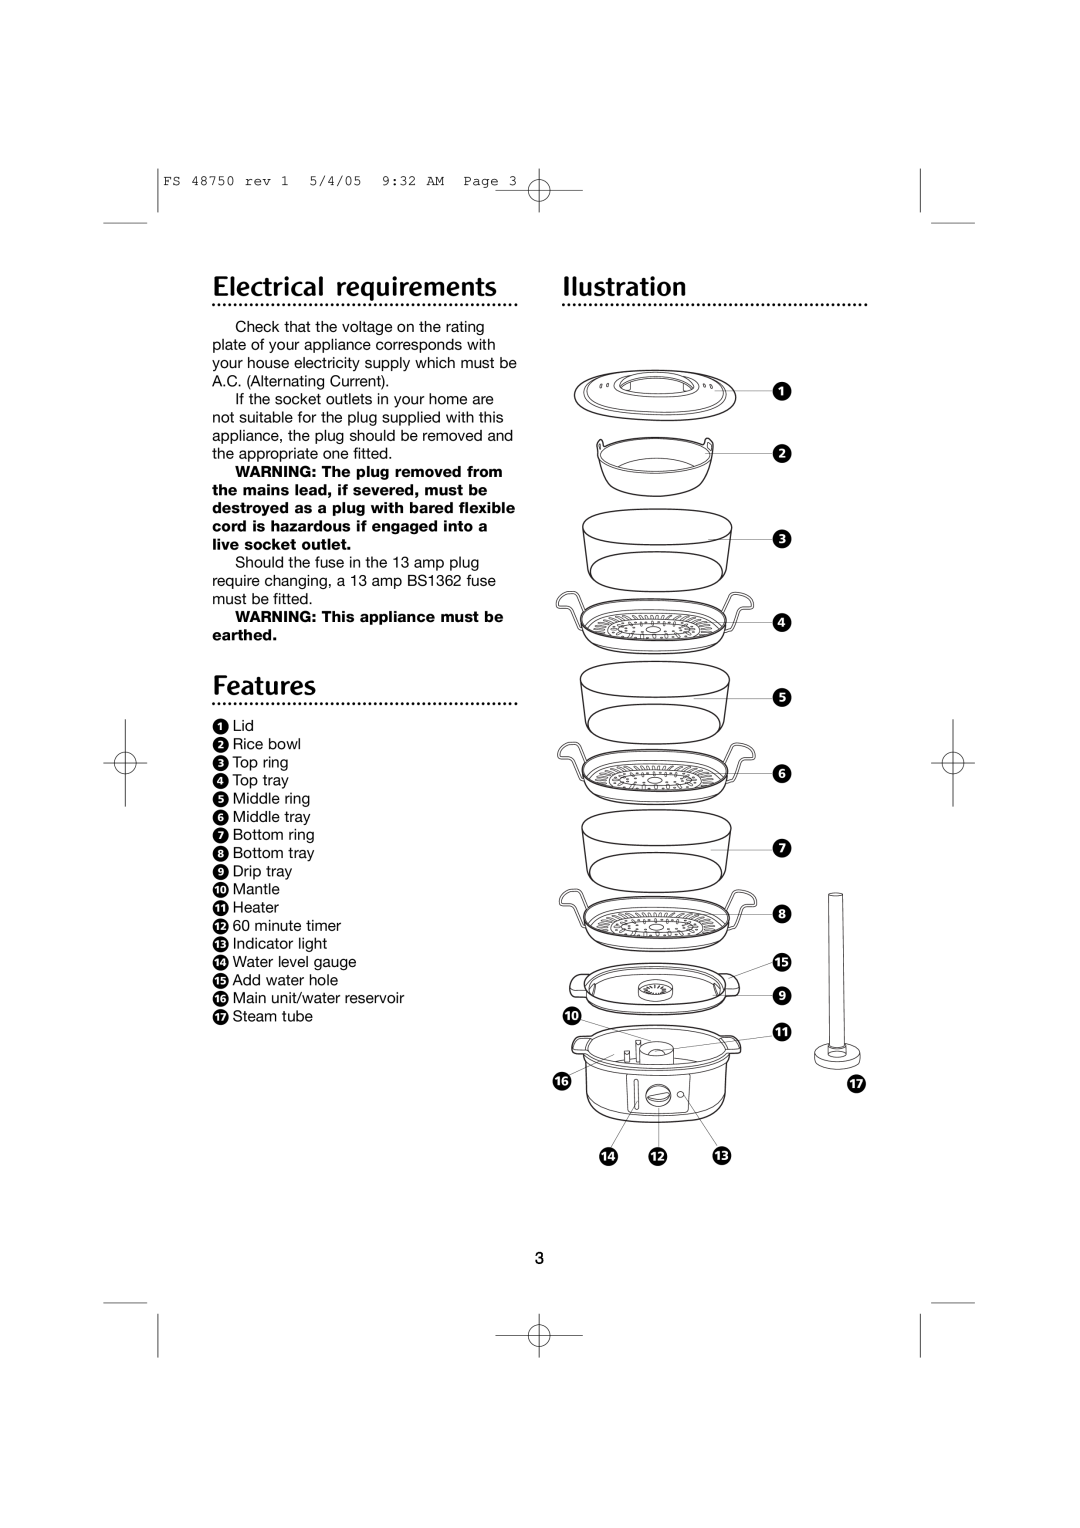 Morphy Richards FS 48750 manual Electrical requirements, Ilustration, Features, ⁄ ¤ ‹ › ﬁ ﬂ ‡ · Ë ‚ ‰ Í, Á Â Ê 